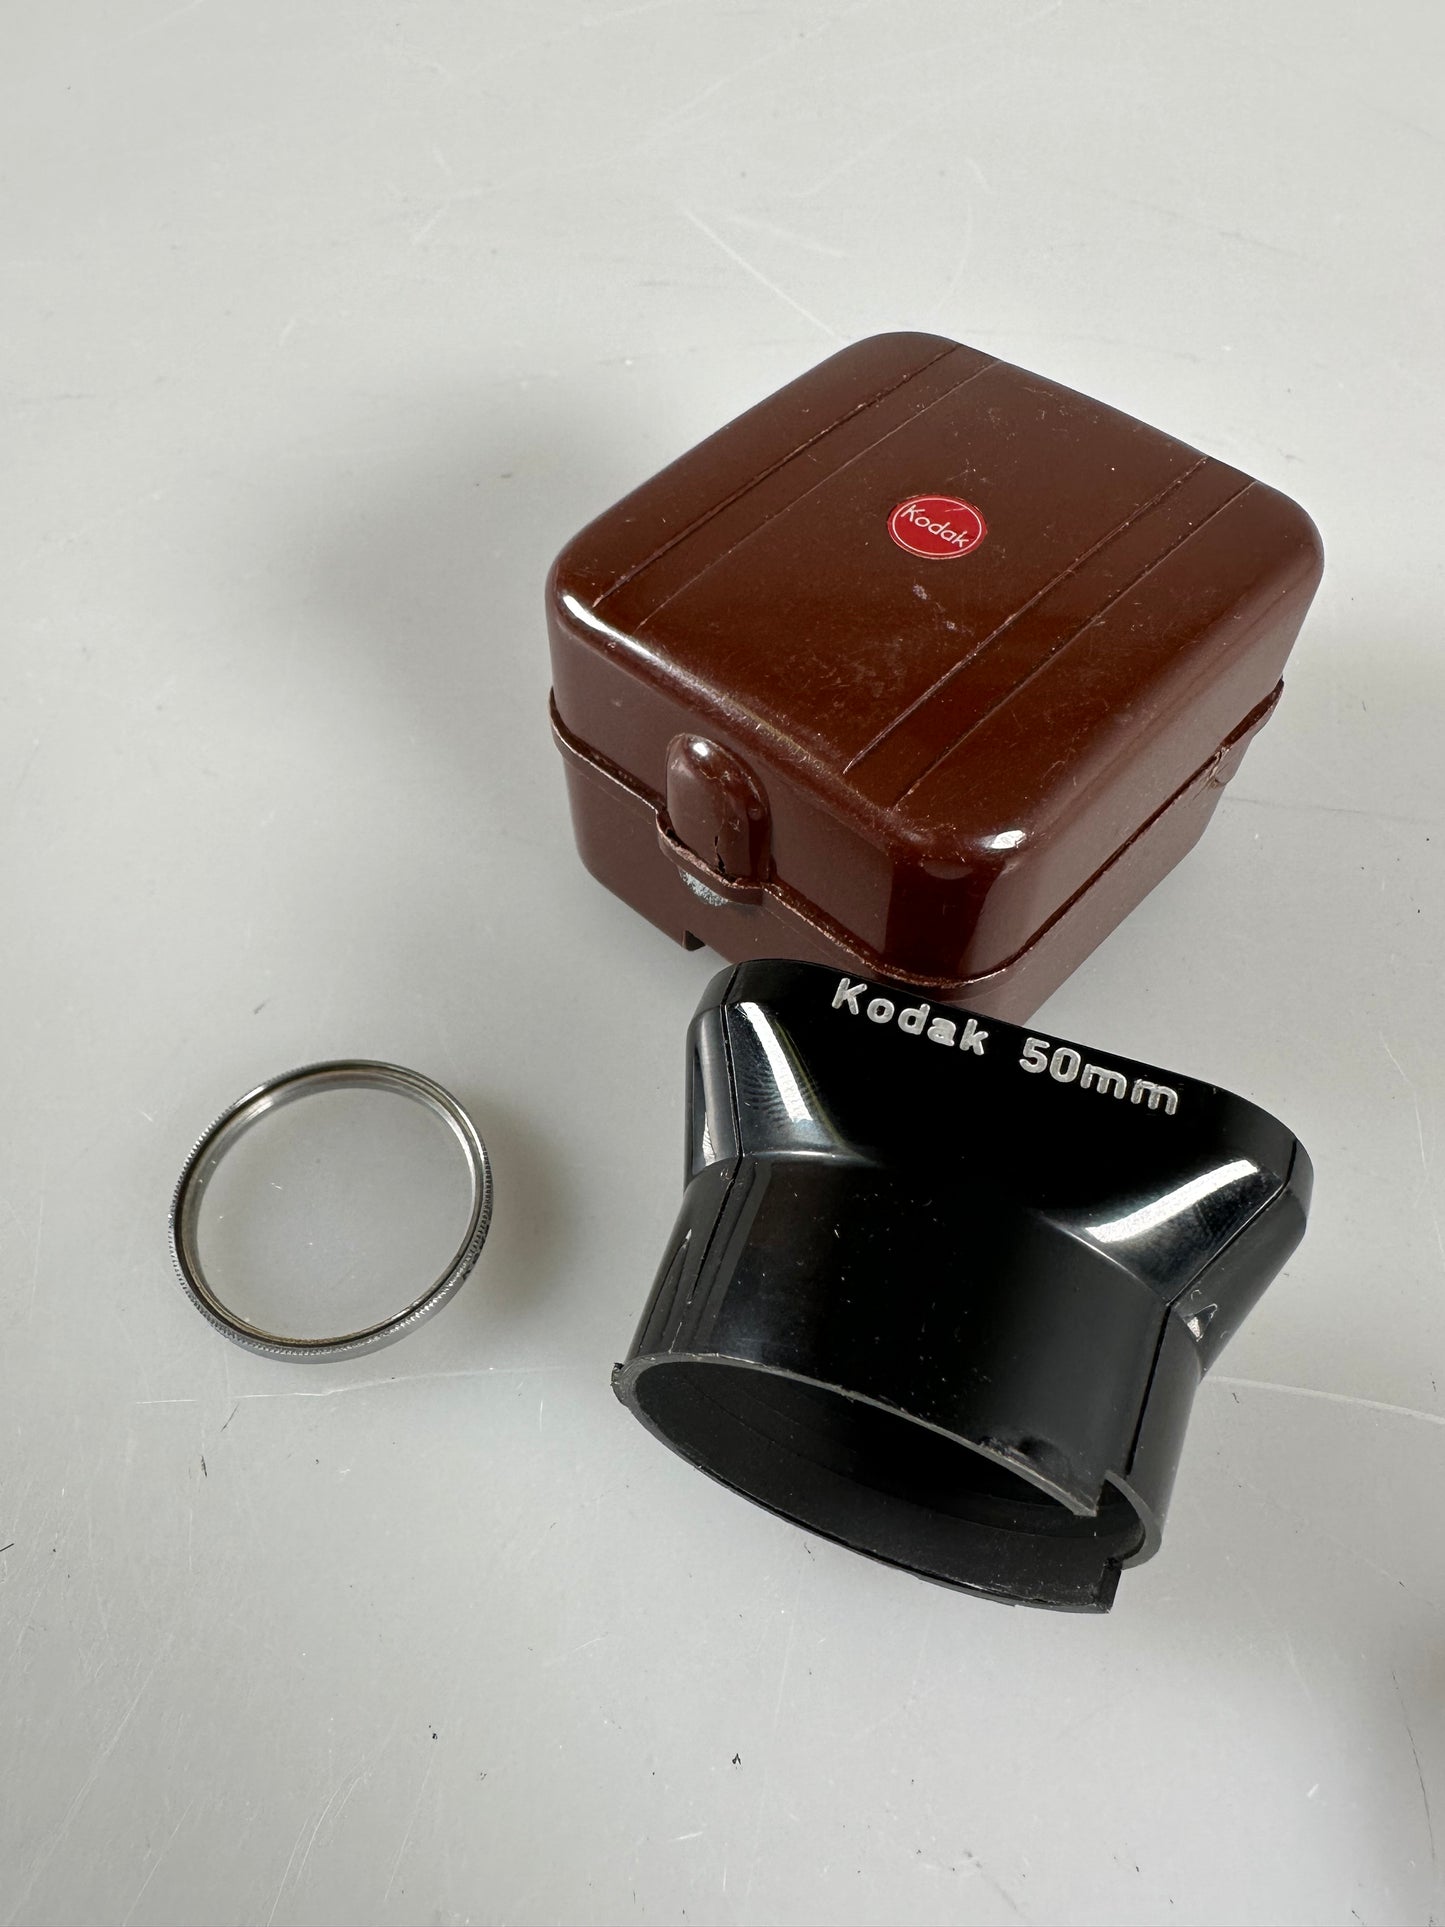 Kodak Retina 50mm Lens Hood Shade w/ case and FVII/32 -0L filter